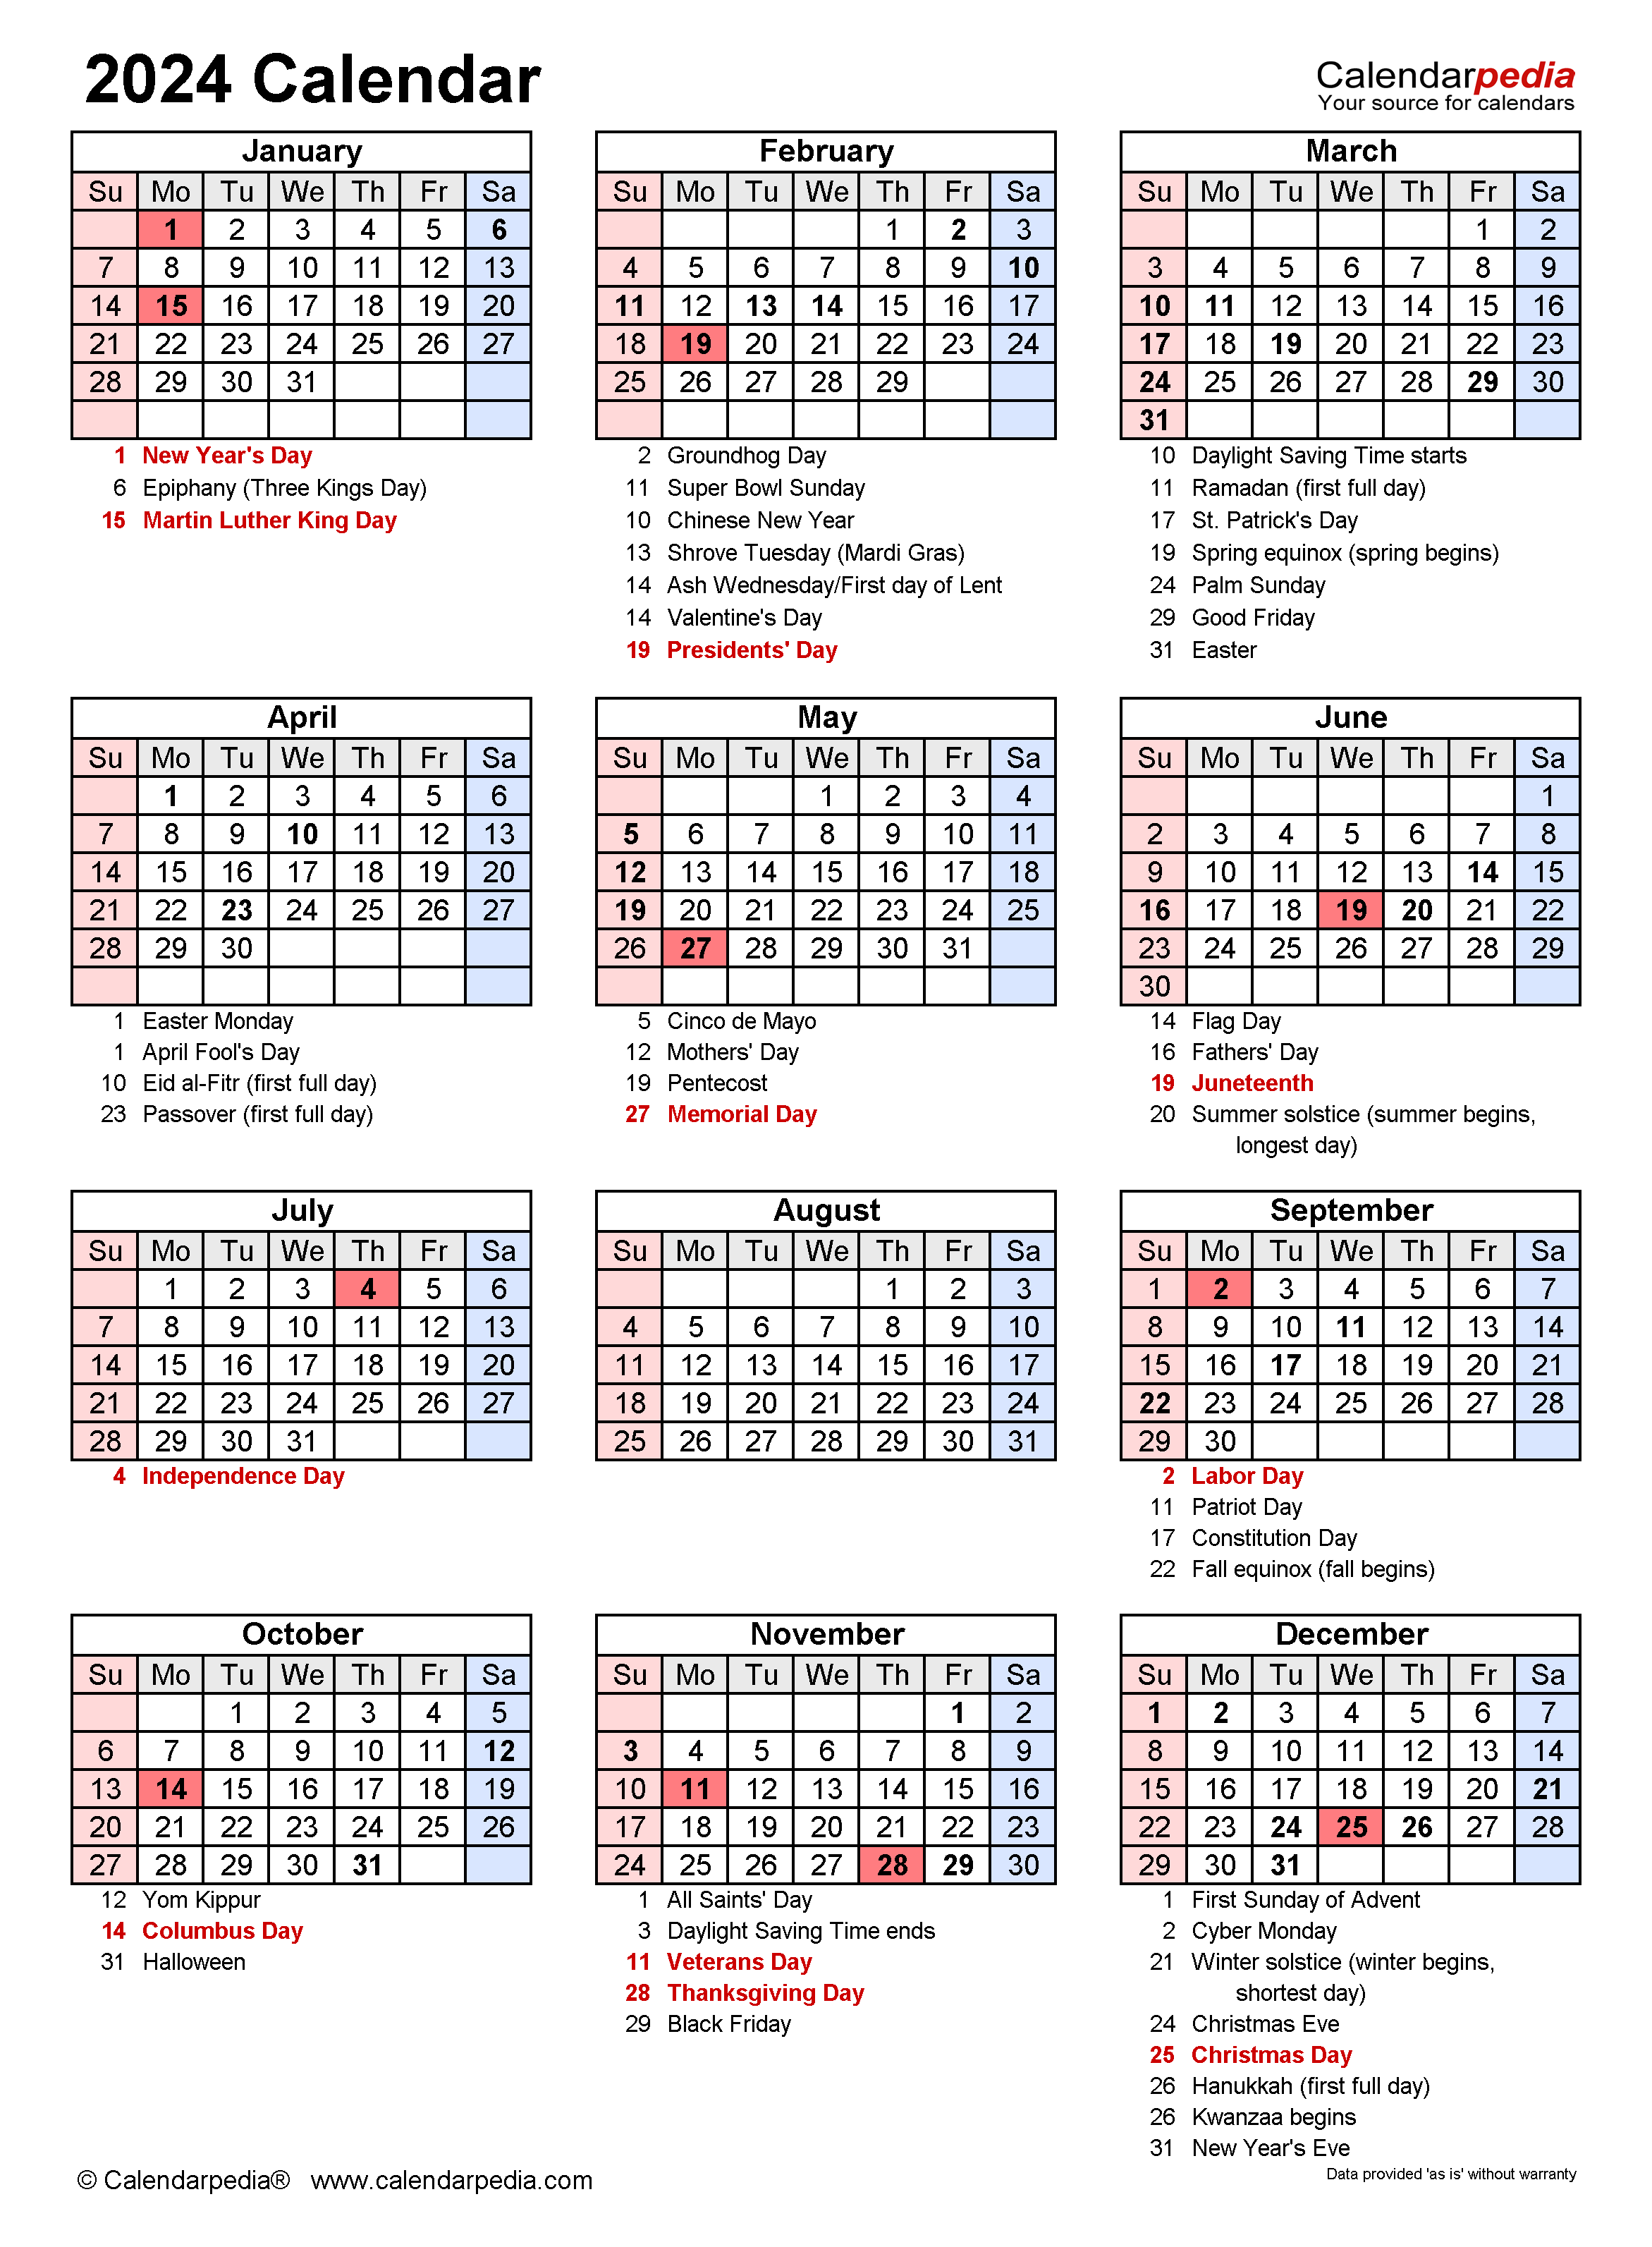 2024 Calendar Free Printable PDF Templates Calendarpedia - Free Printable 2024 Yearly Calendar With Holidays